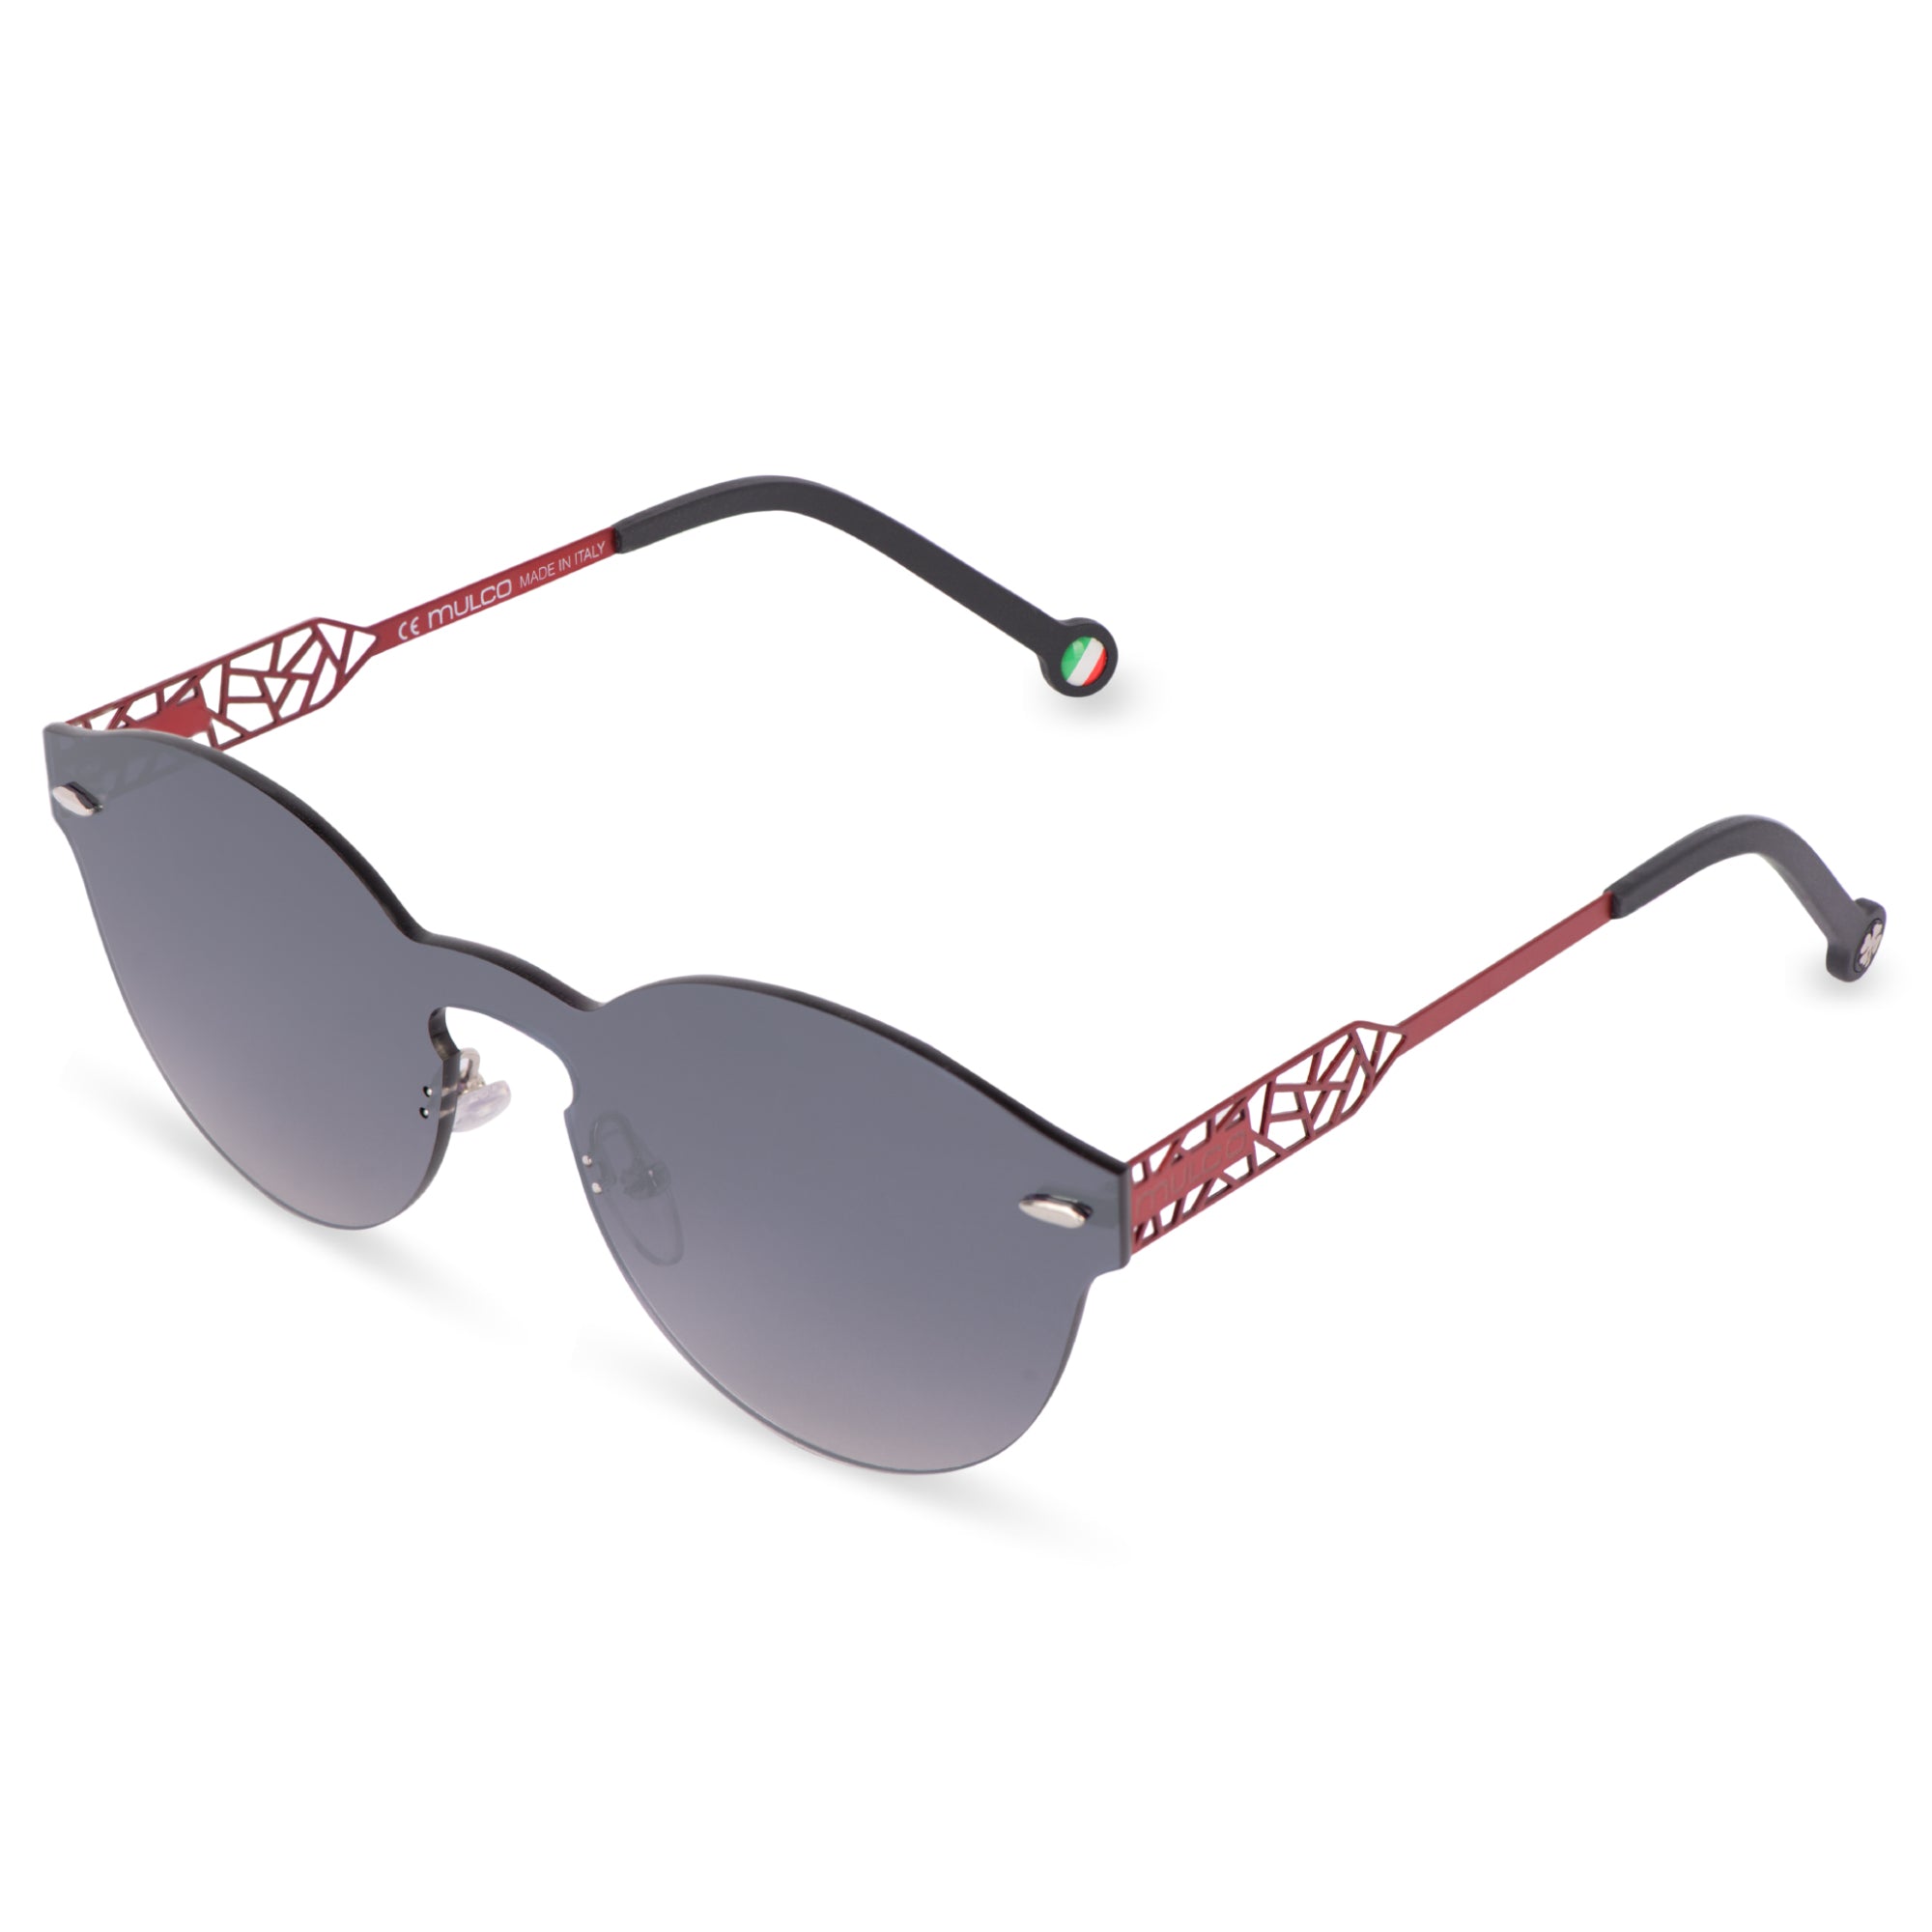 Sunglasses Round Shape Watches – Steel Web Mulco MK Stainless